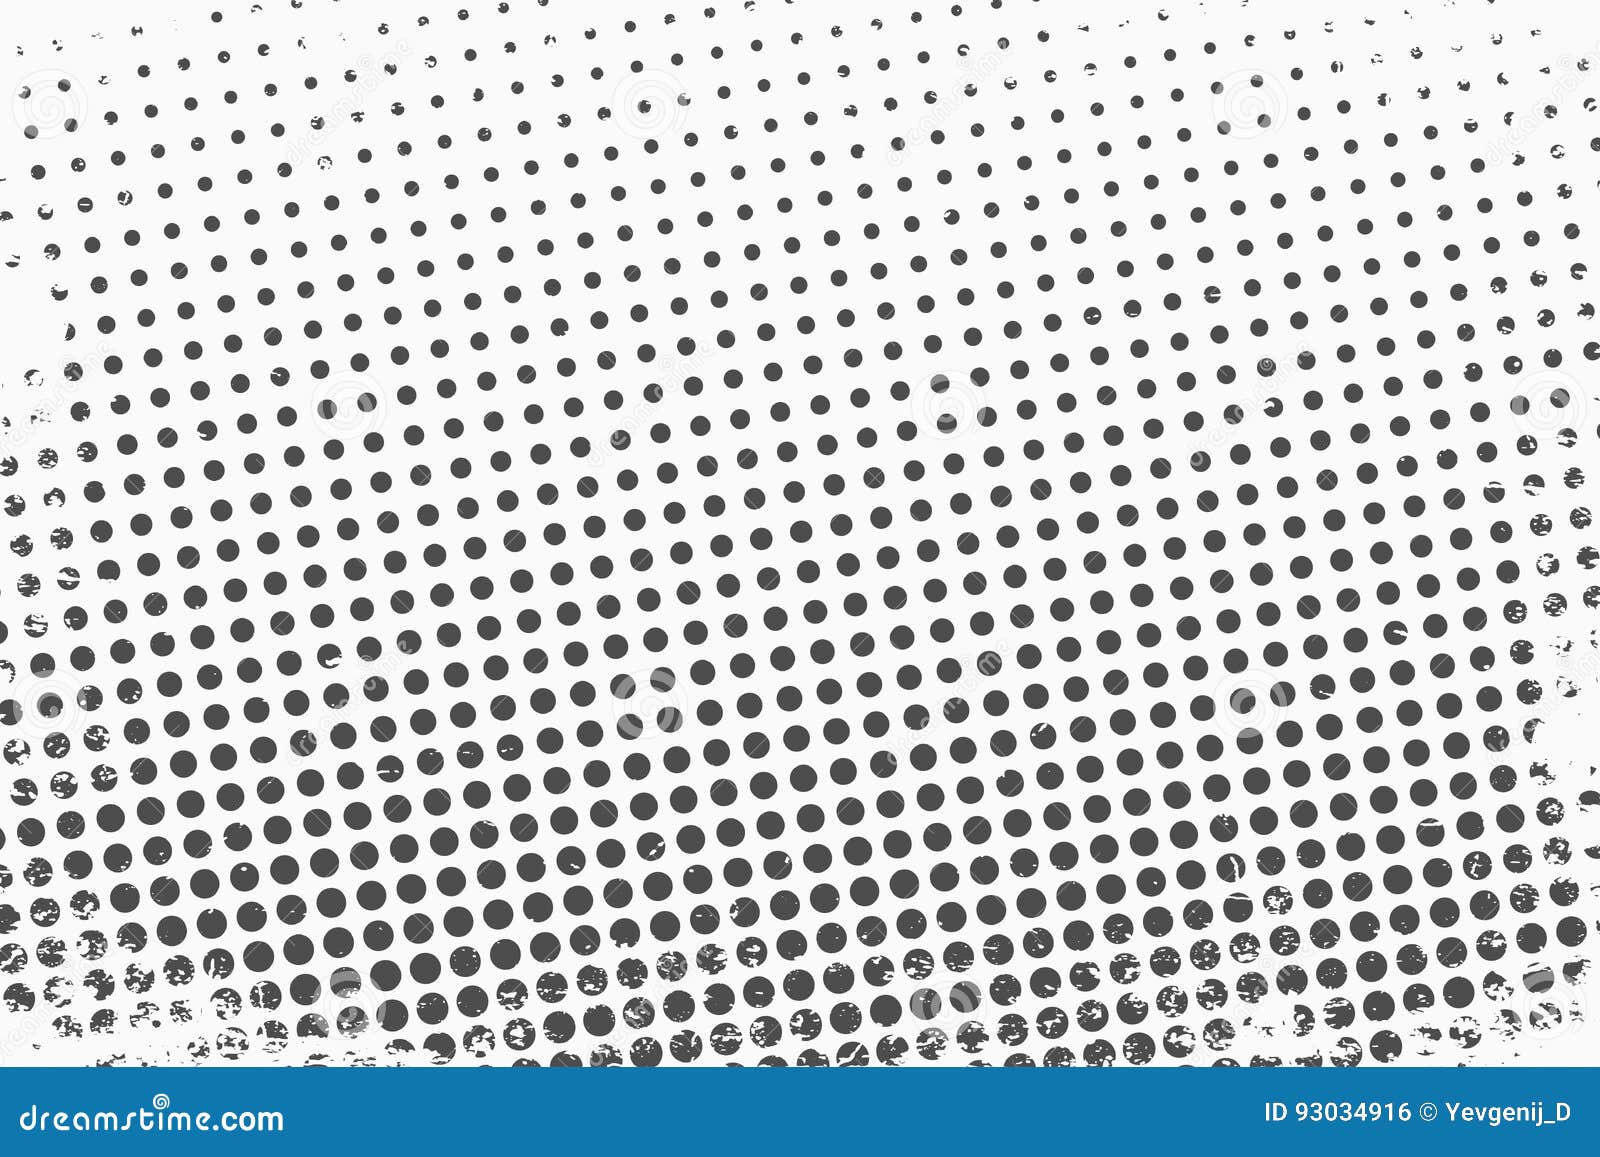 halftone dots. monochrome  texture background for prepress, dtp, comics, poster. pop art style template